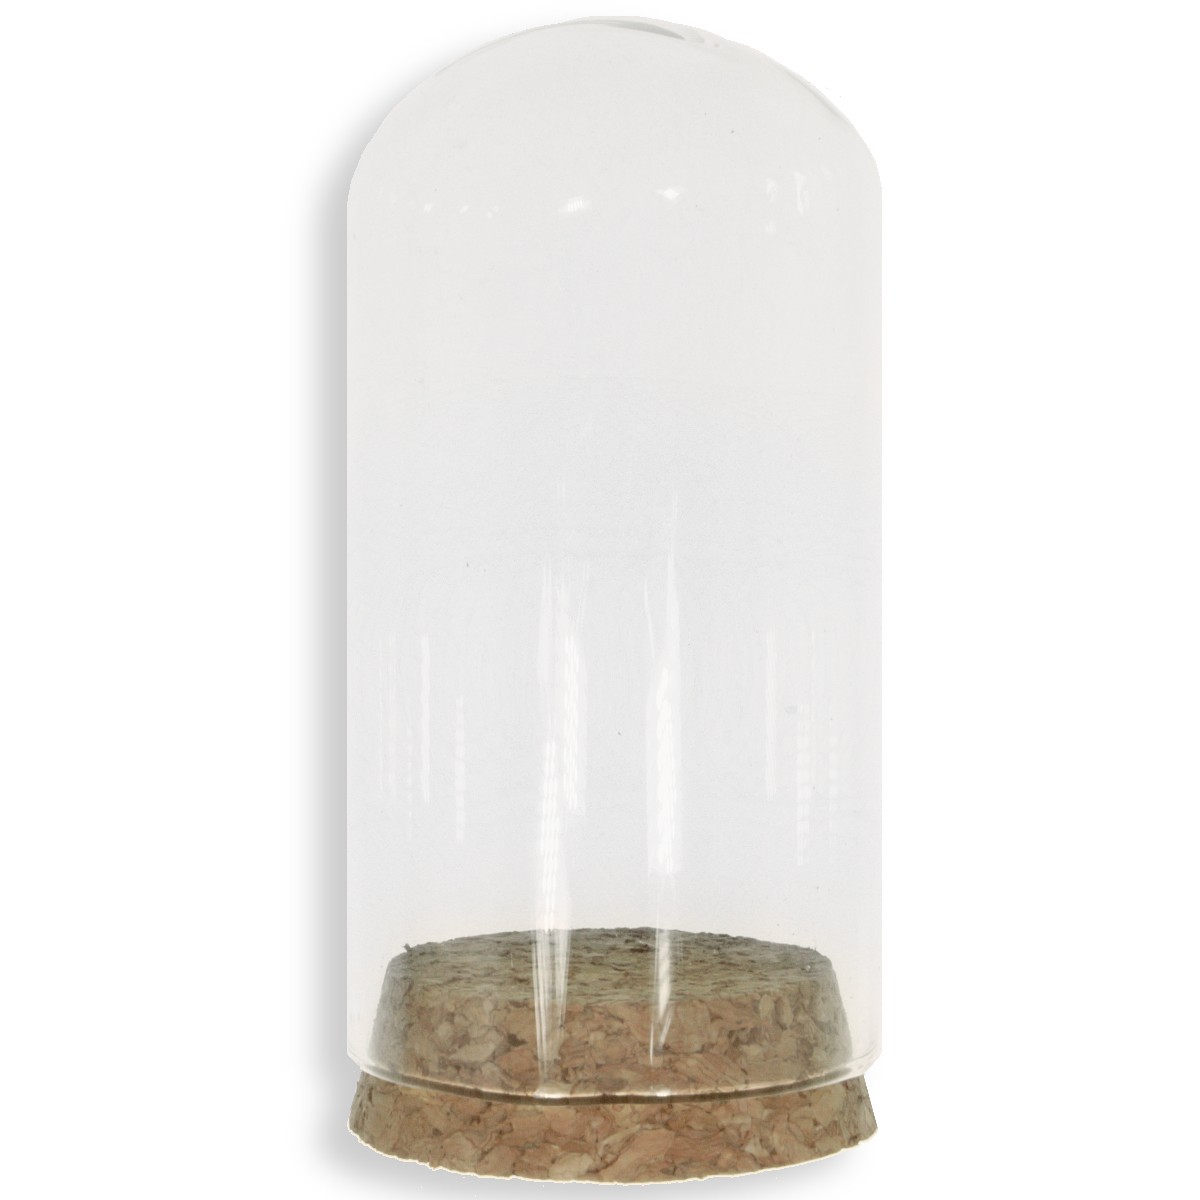 Mini cupola sticla cu suport pluta 9 5x4 5cm